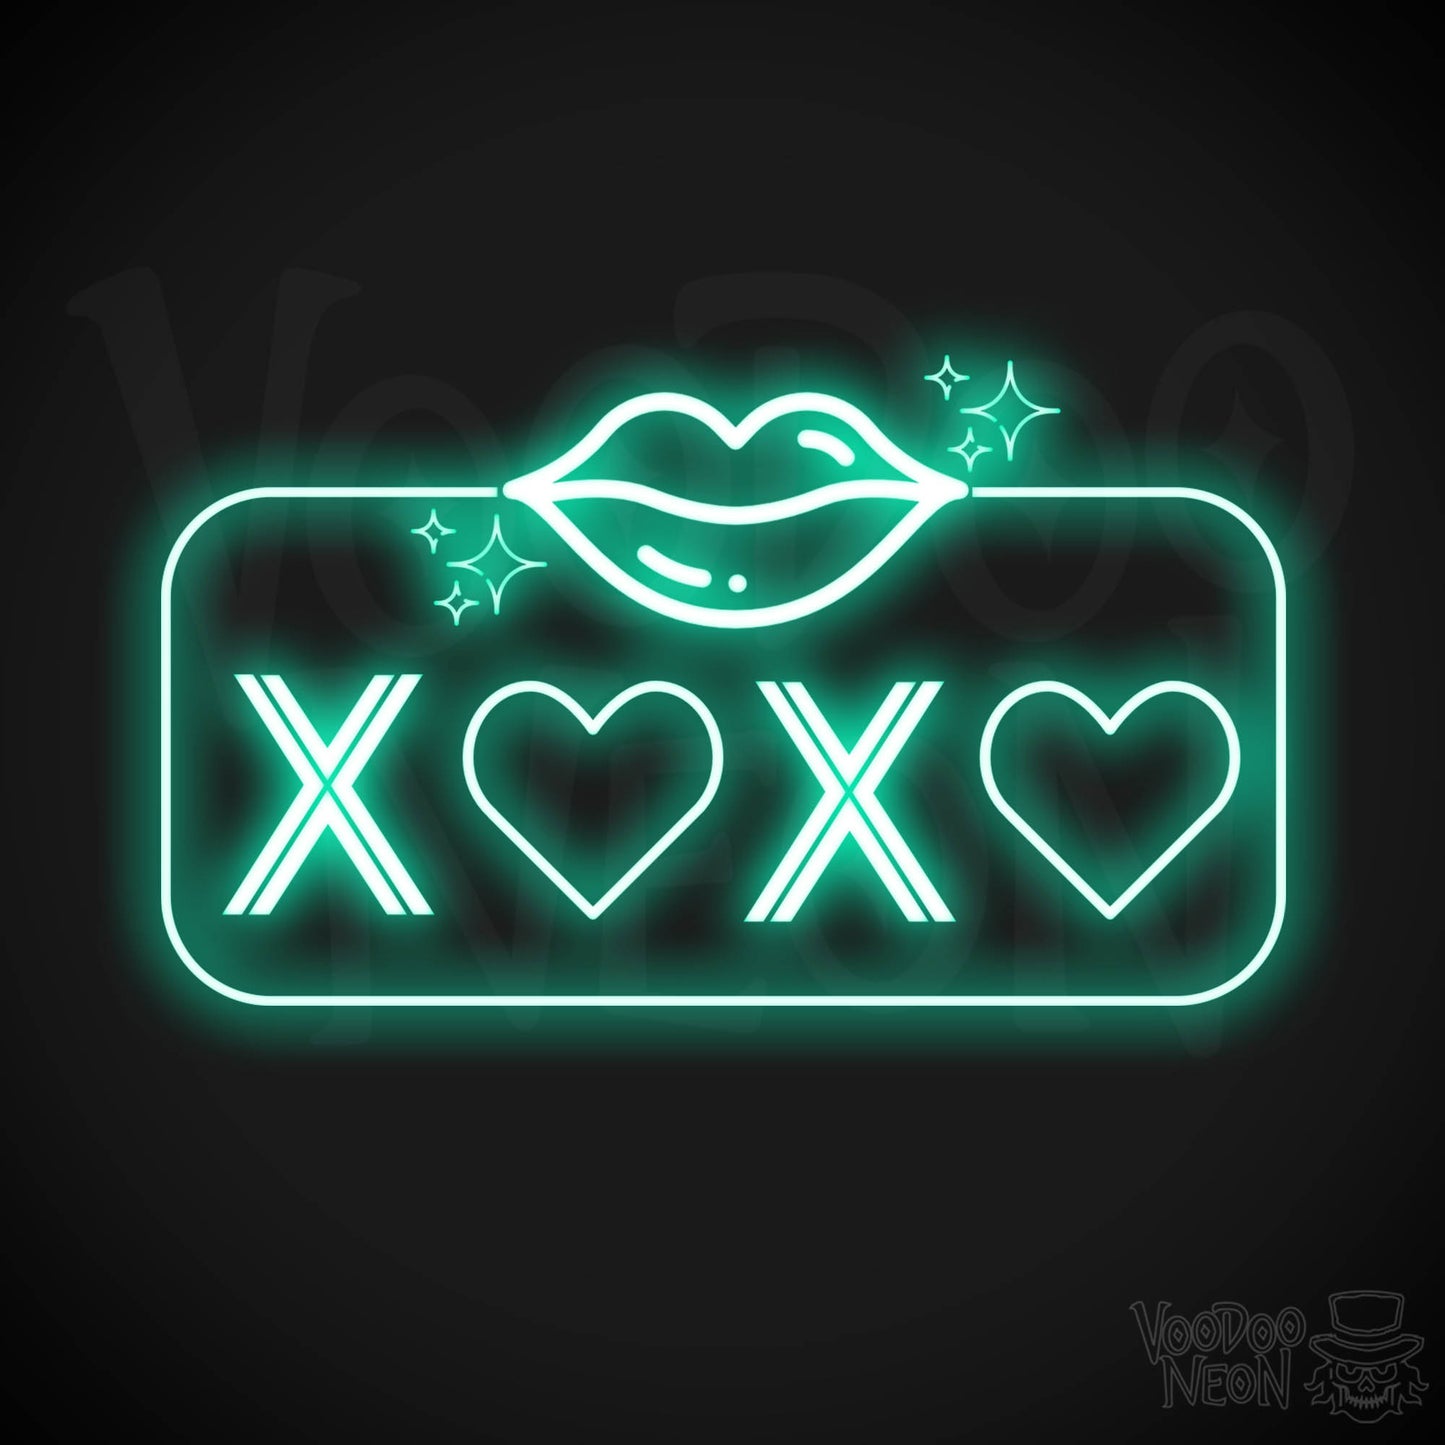 Xoxo Neon Sign - Neon XOXO - Kiss Hug Neon Wall Art - Color Light Green